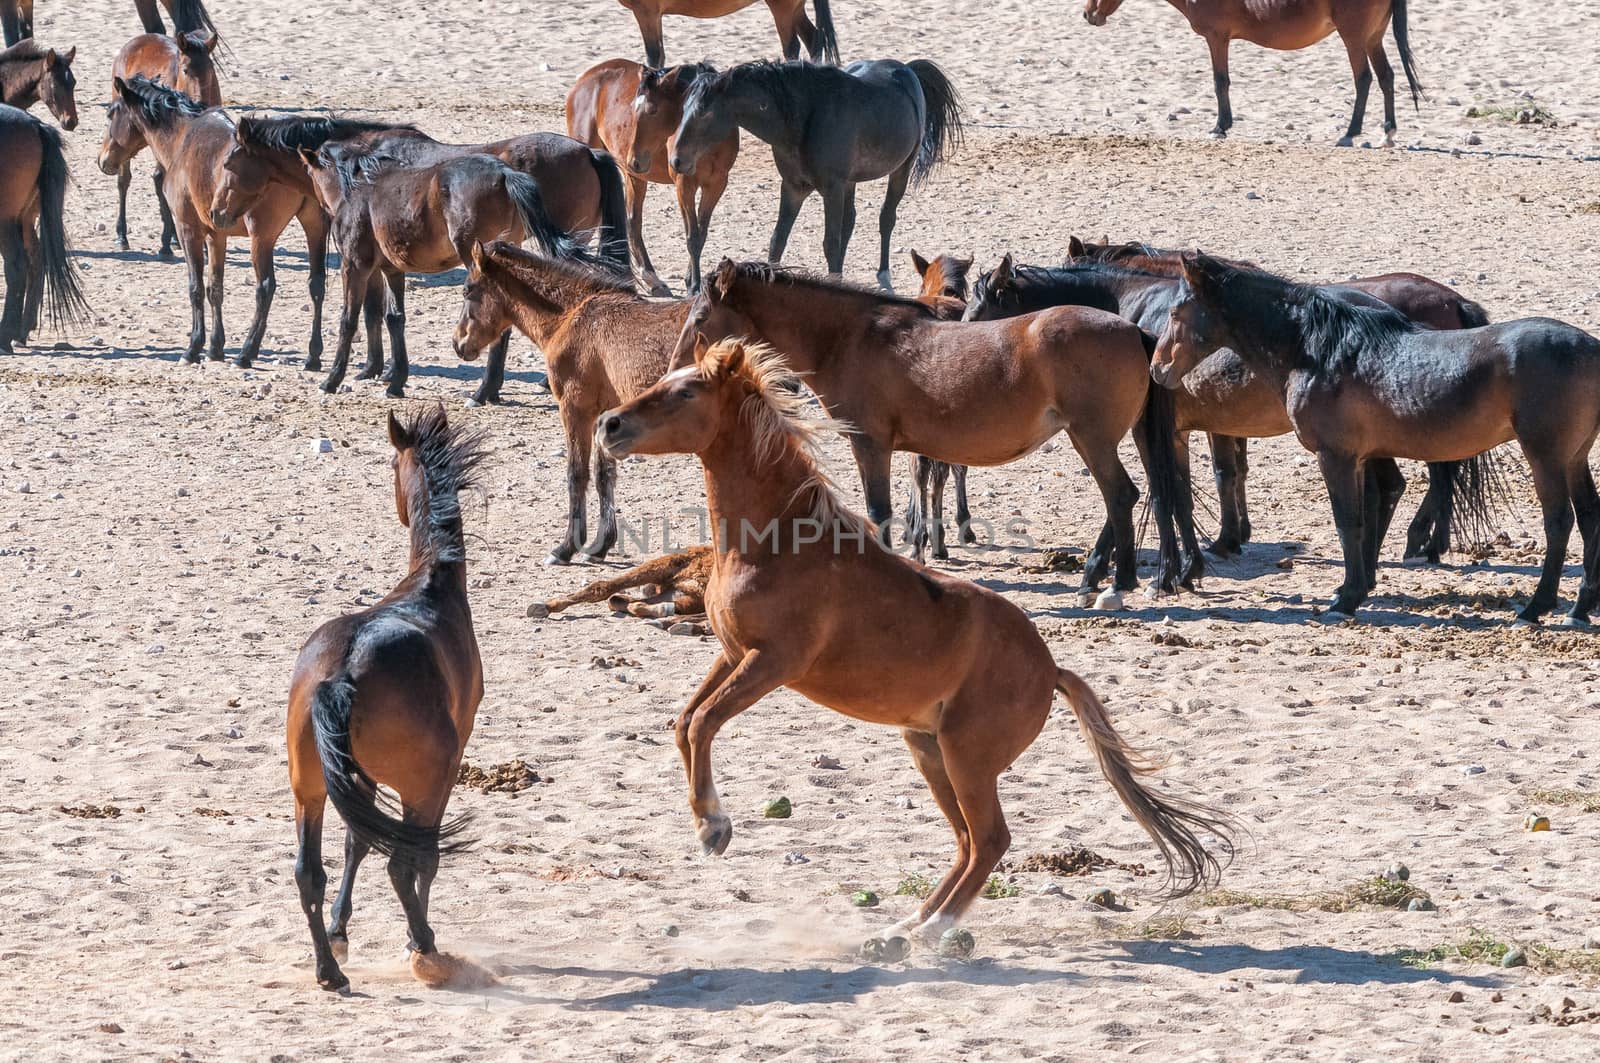 Wild horses of the Namib fighting at Garub by dpreezg